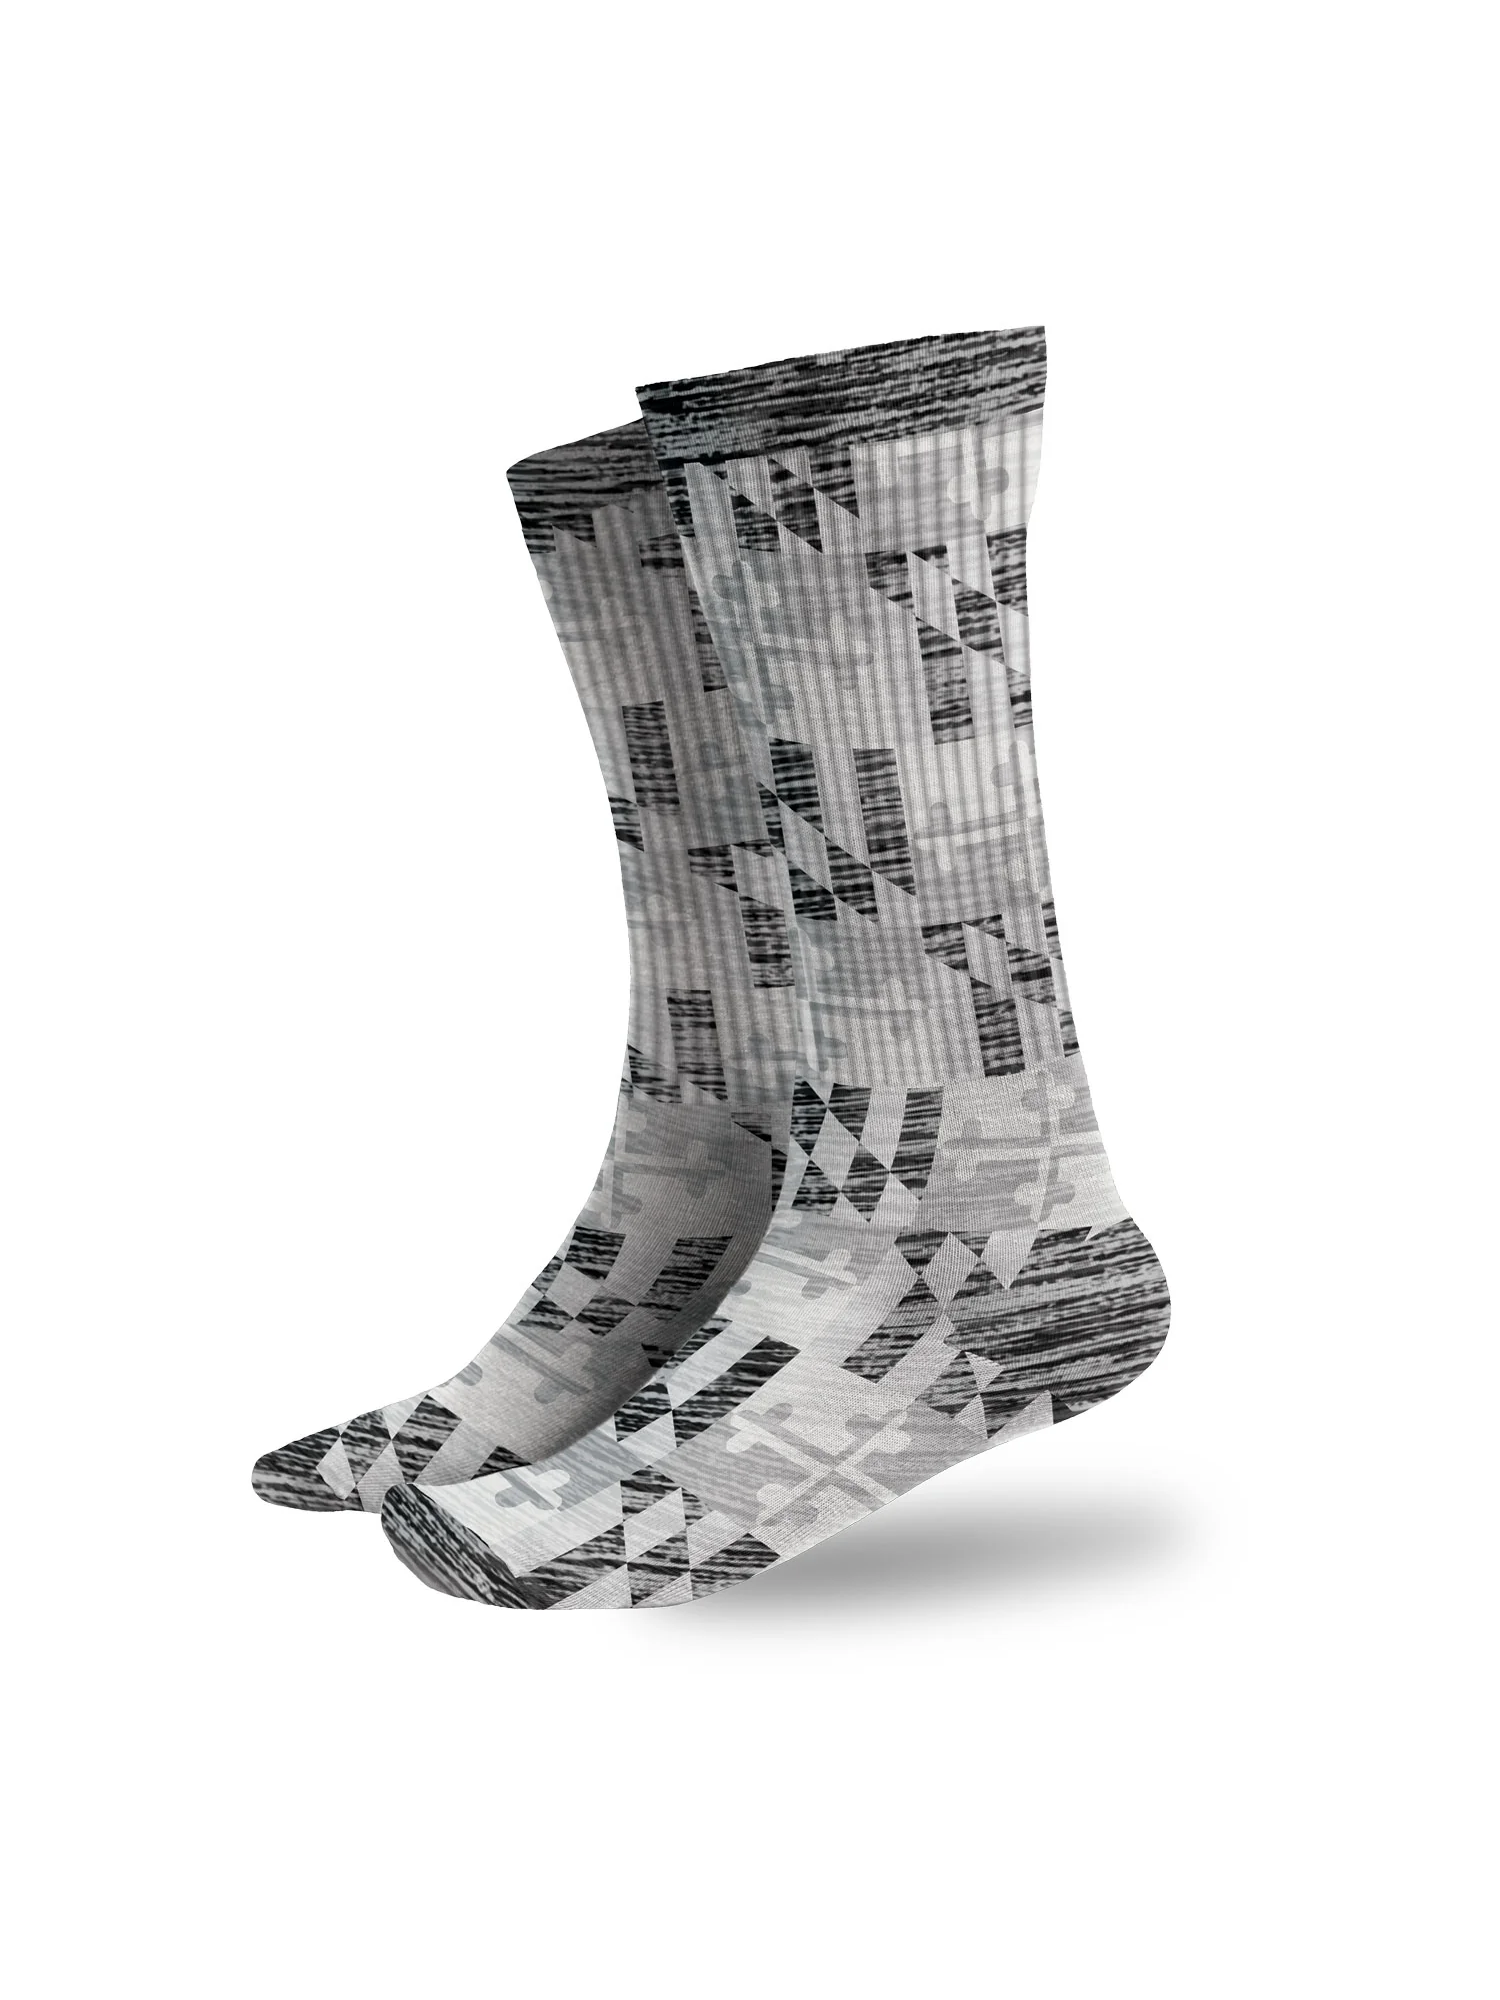 maryland-flag-grayscale-socks